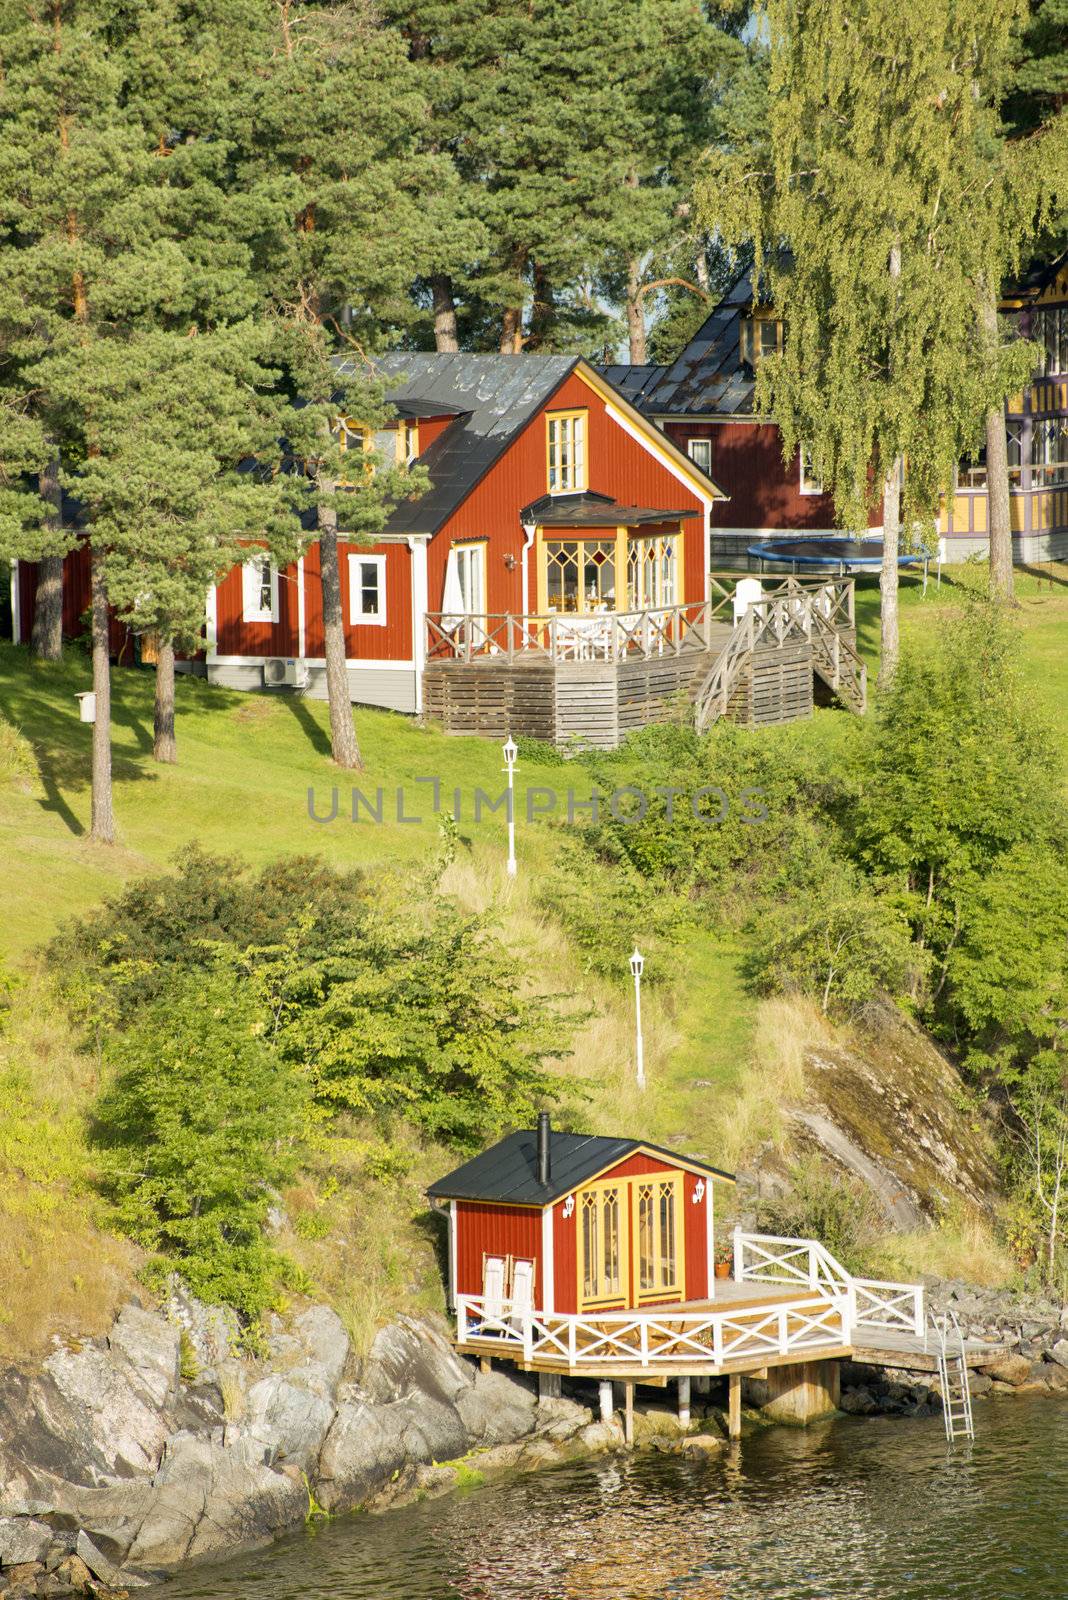 Summer cottage in Sweden. Taken on August 2012.